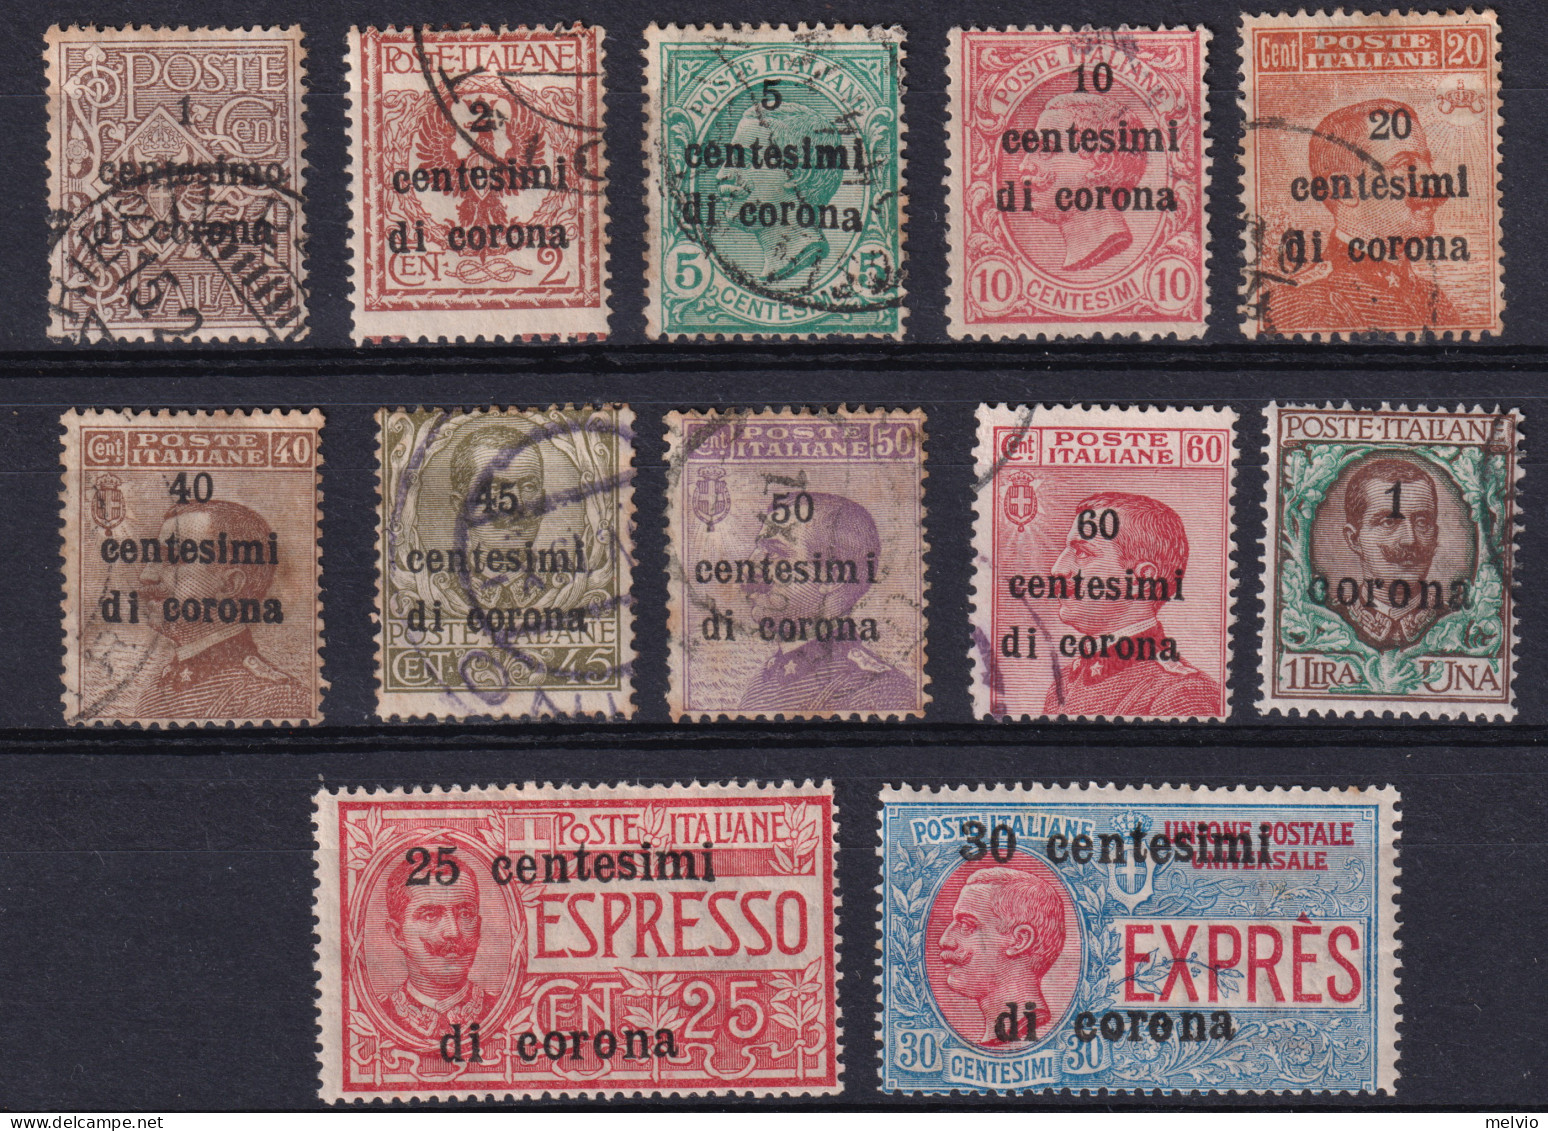 1919-Trento E Trieste (O=used) Serie 11 Valori + 2 Espressi (MLH=*) - Trentin & Trieste